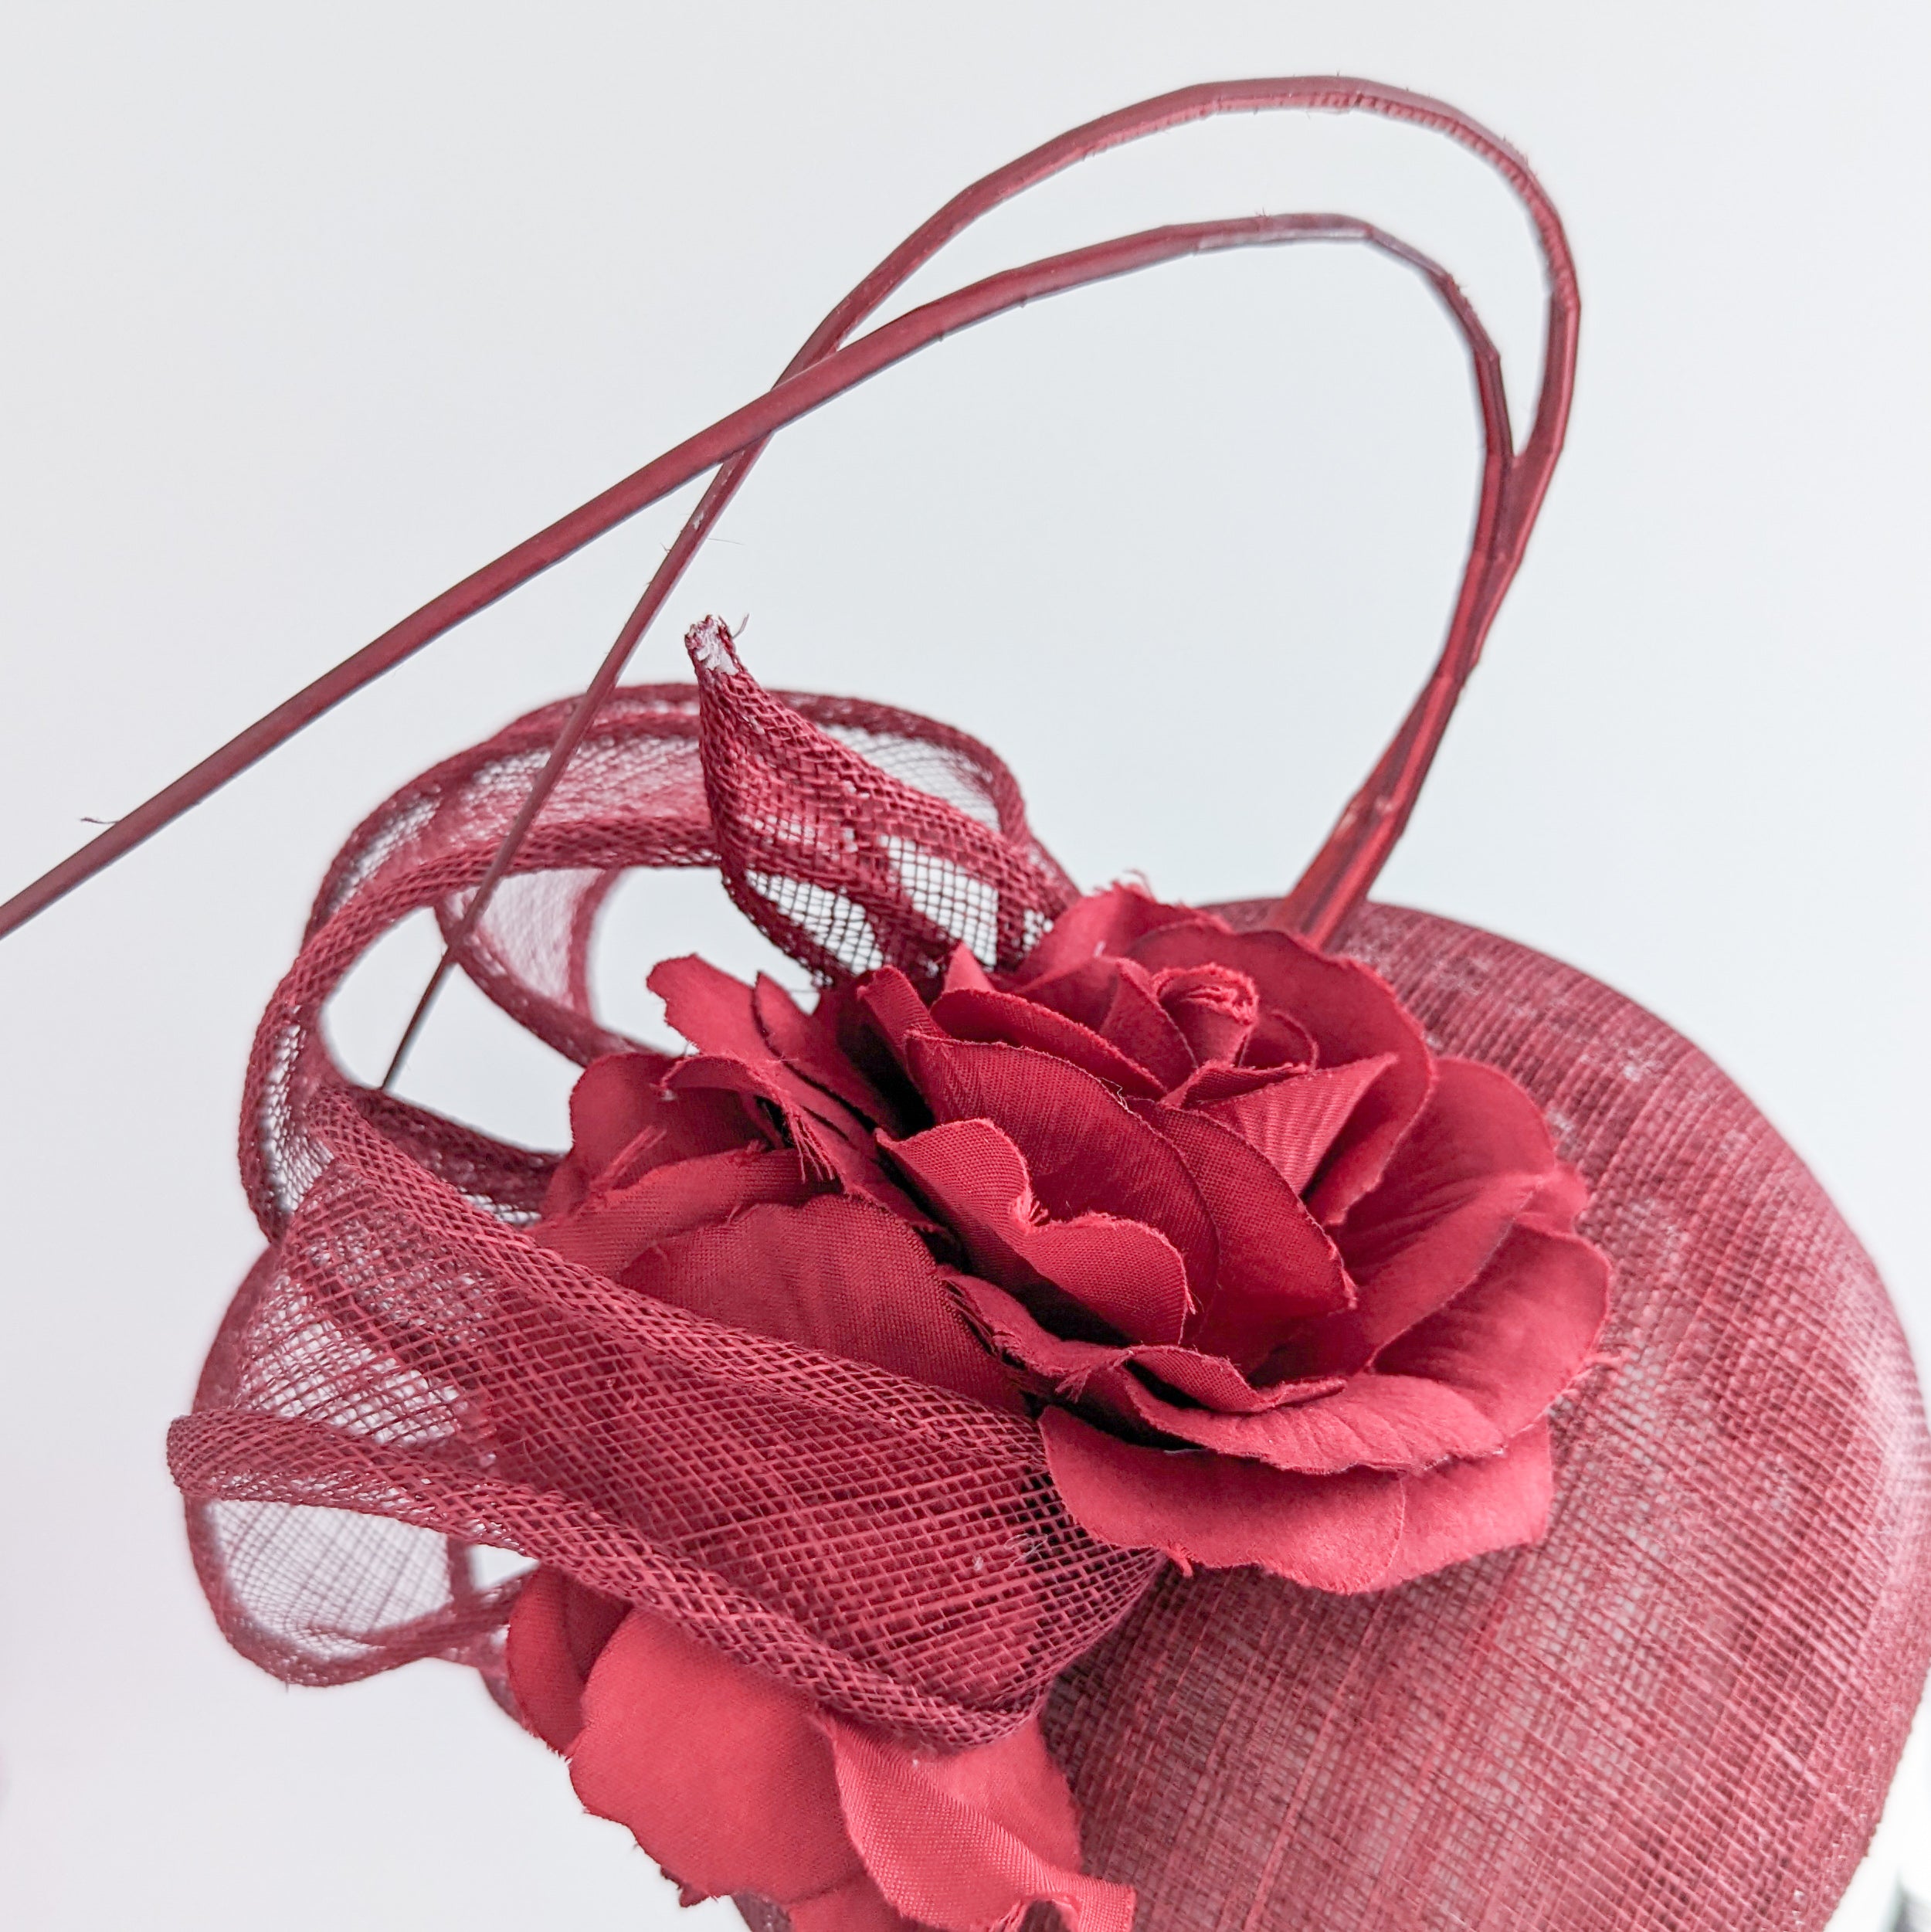 Burgundy flower fascinator hat